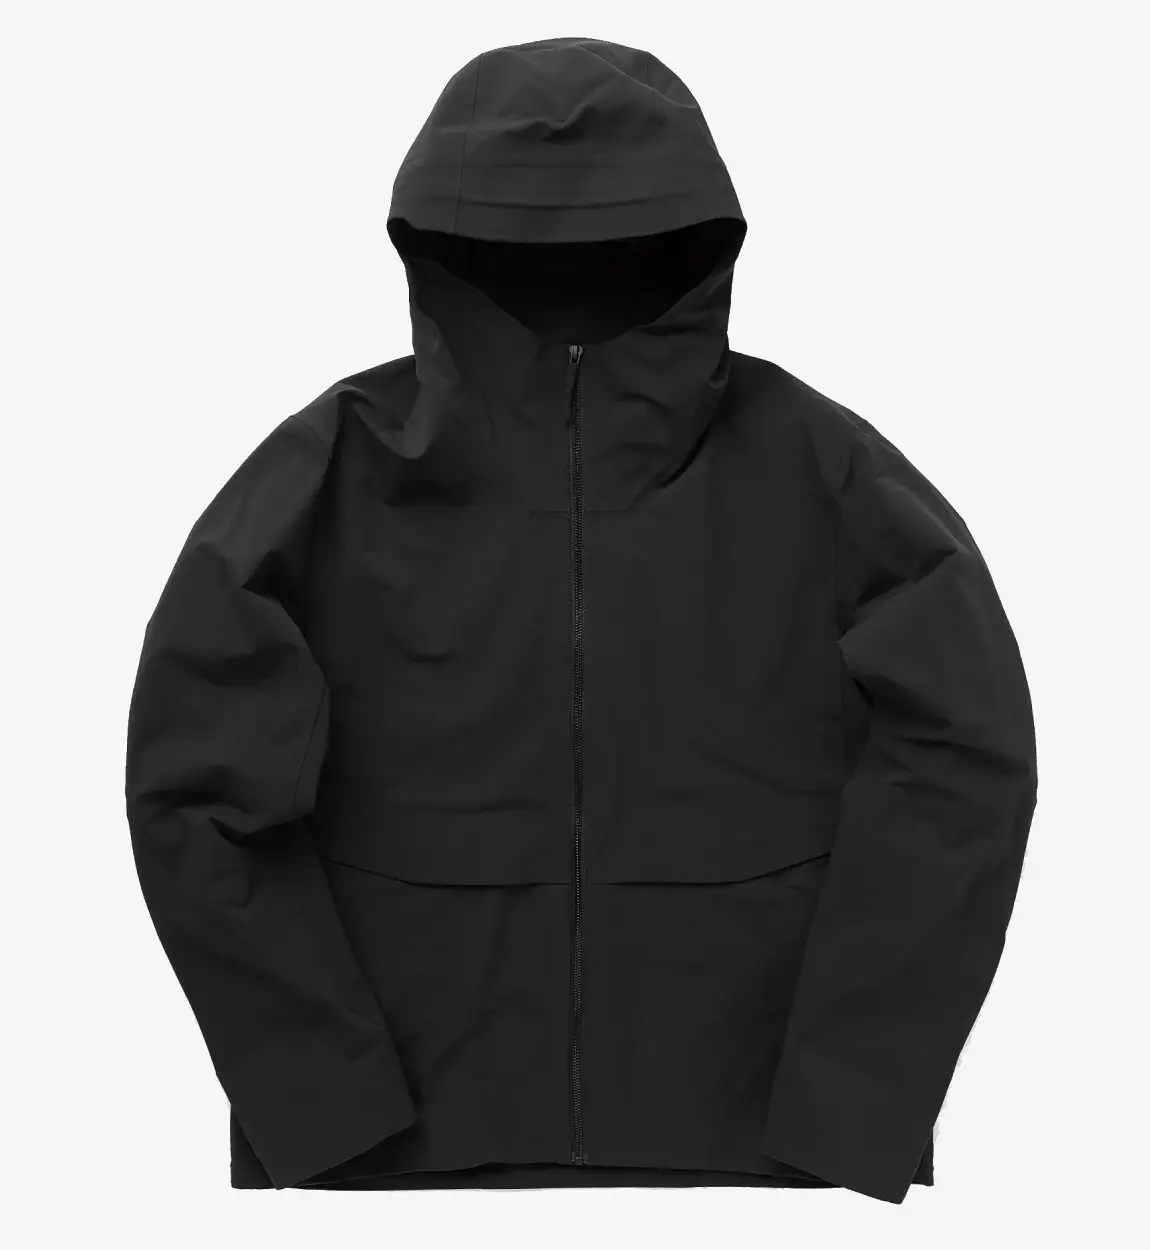 Tendon_Windbreaker_Custom_Made_Black_Jacket